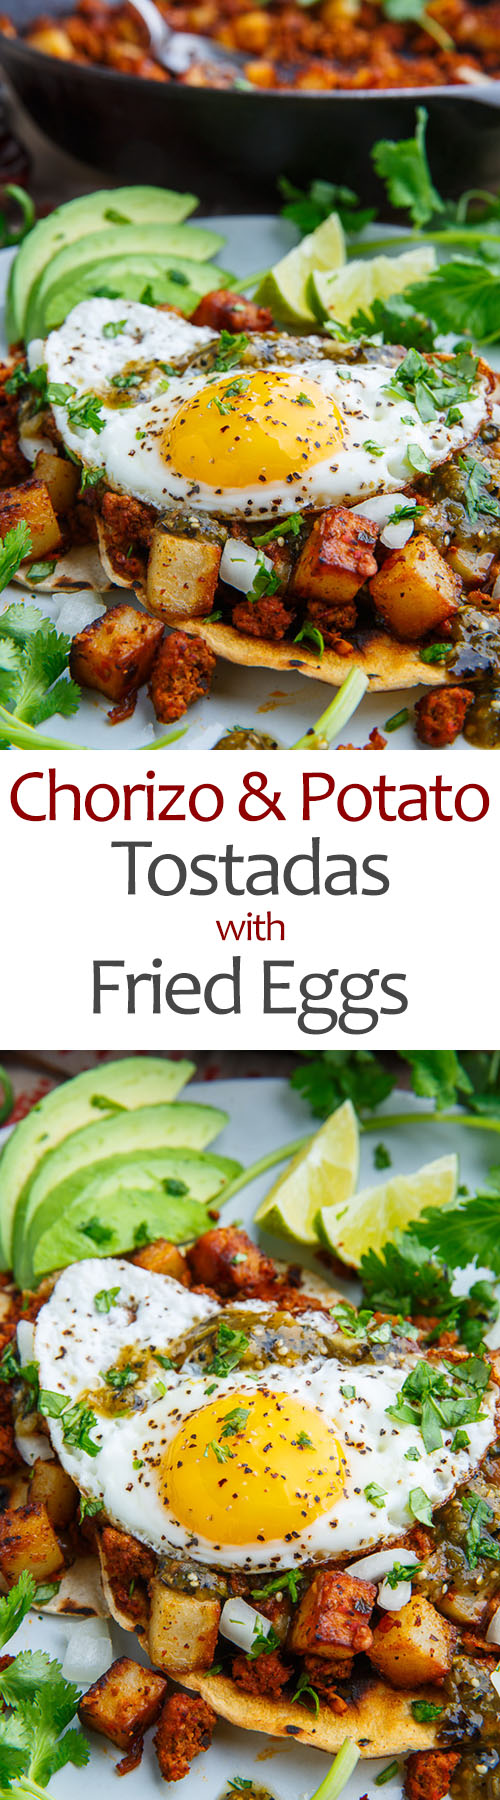 Chorizo and Potato Tostadas with Fried Eggs